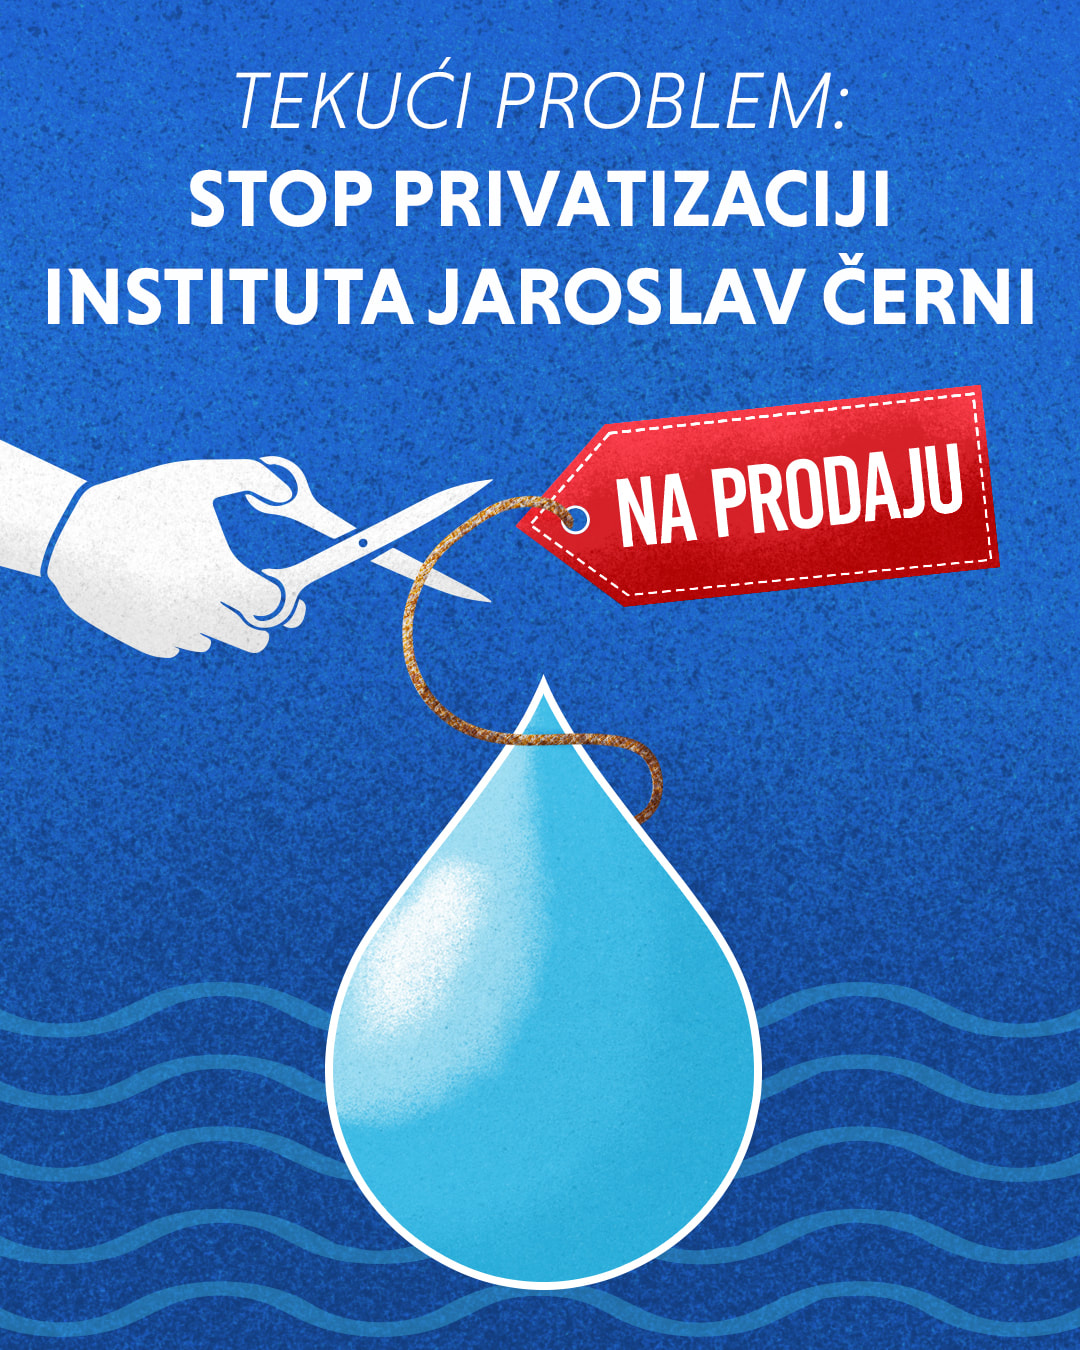 Read more about the article Apel za obustavljanje privatizacije instituta “Jaroslav Černi”